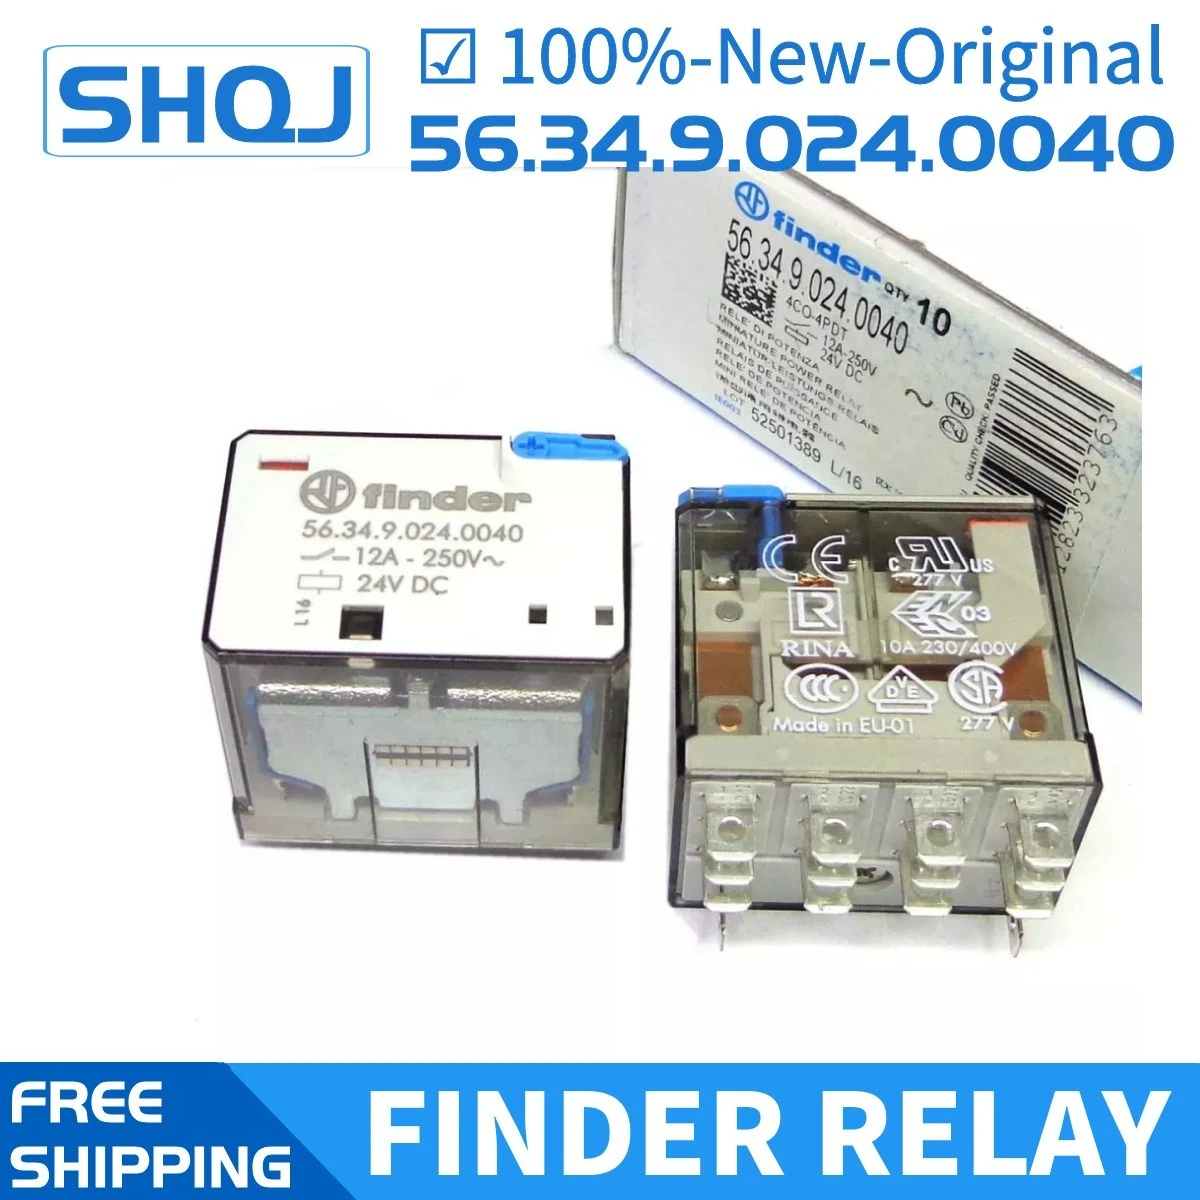 

finder relay 56.34.9.024.0040 56.34.8.230.0040 96.74 14PIN 12A 100%-new-original